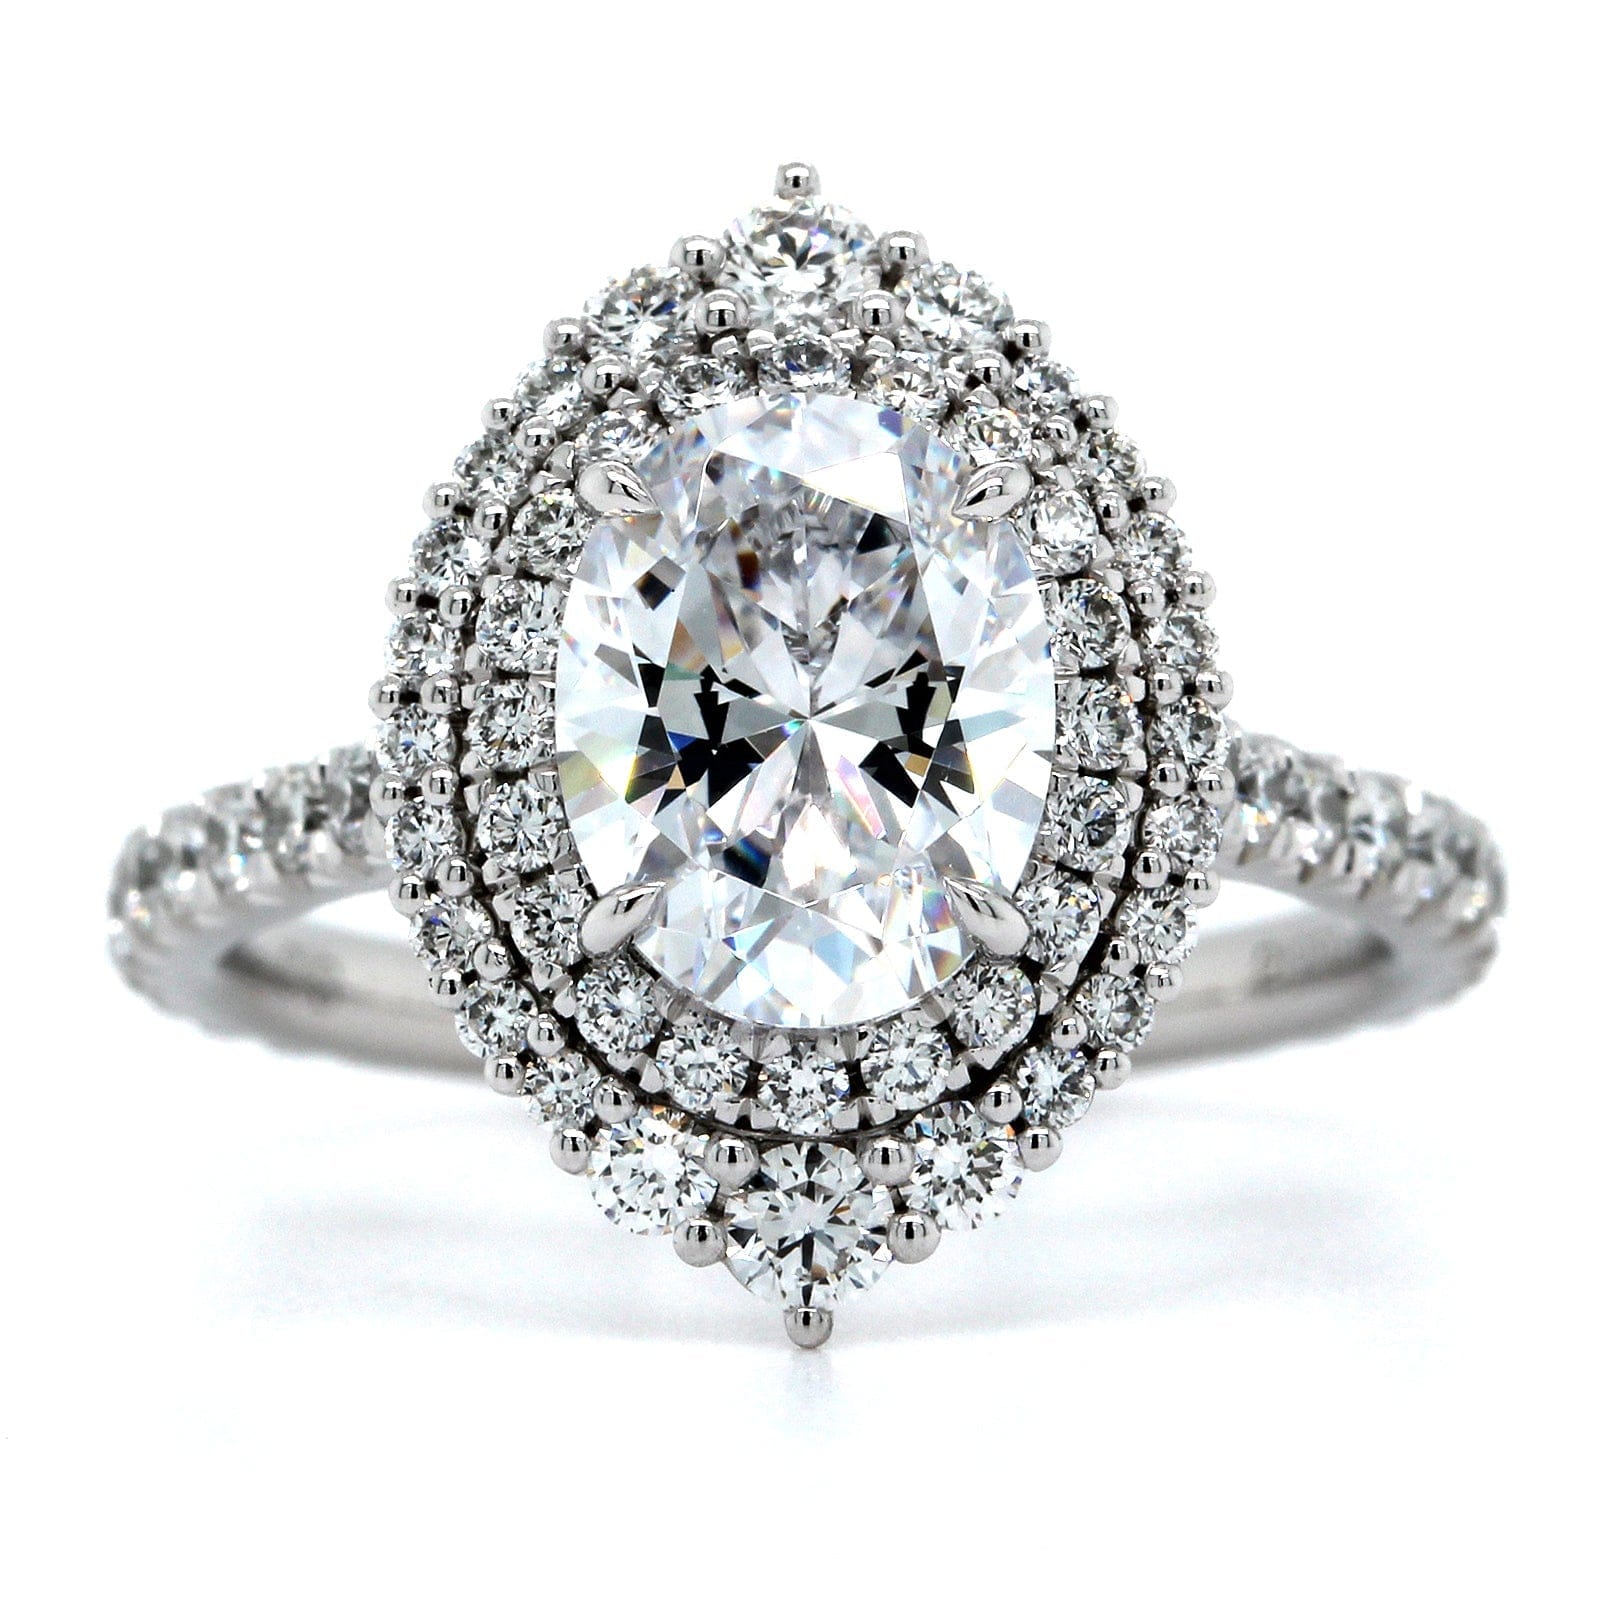 Platinum Double Diamond Halo Engagement Ring Setting, Platinum, Long's Jewelers